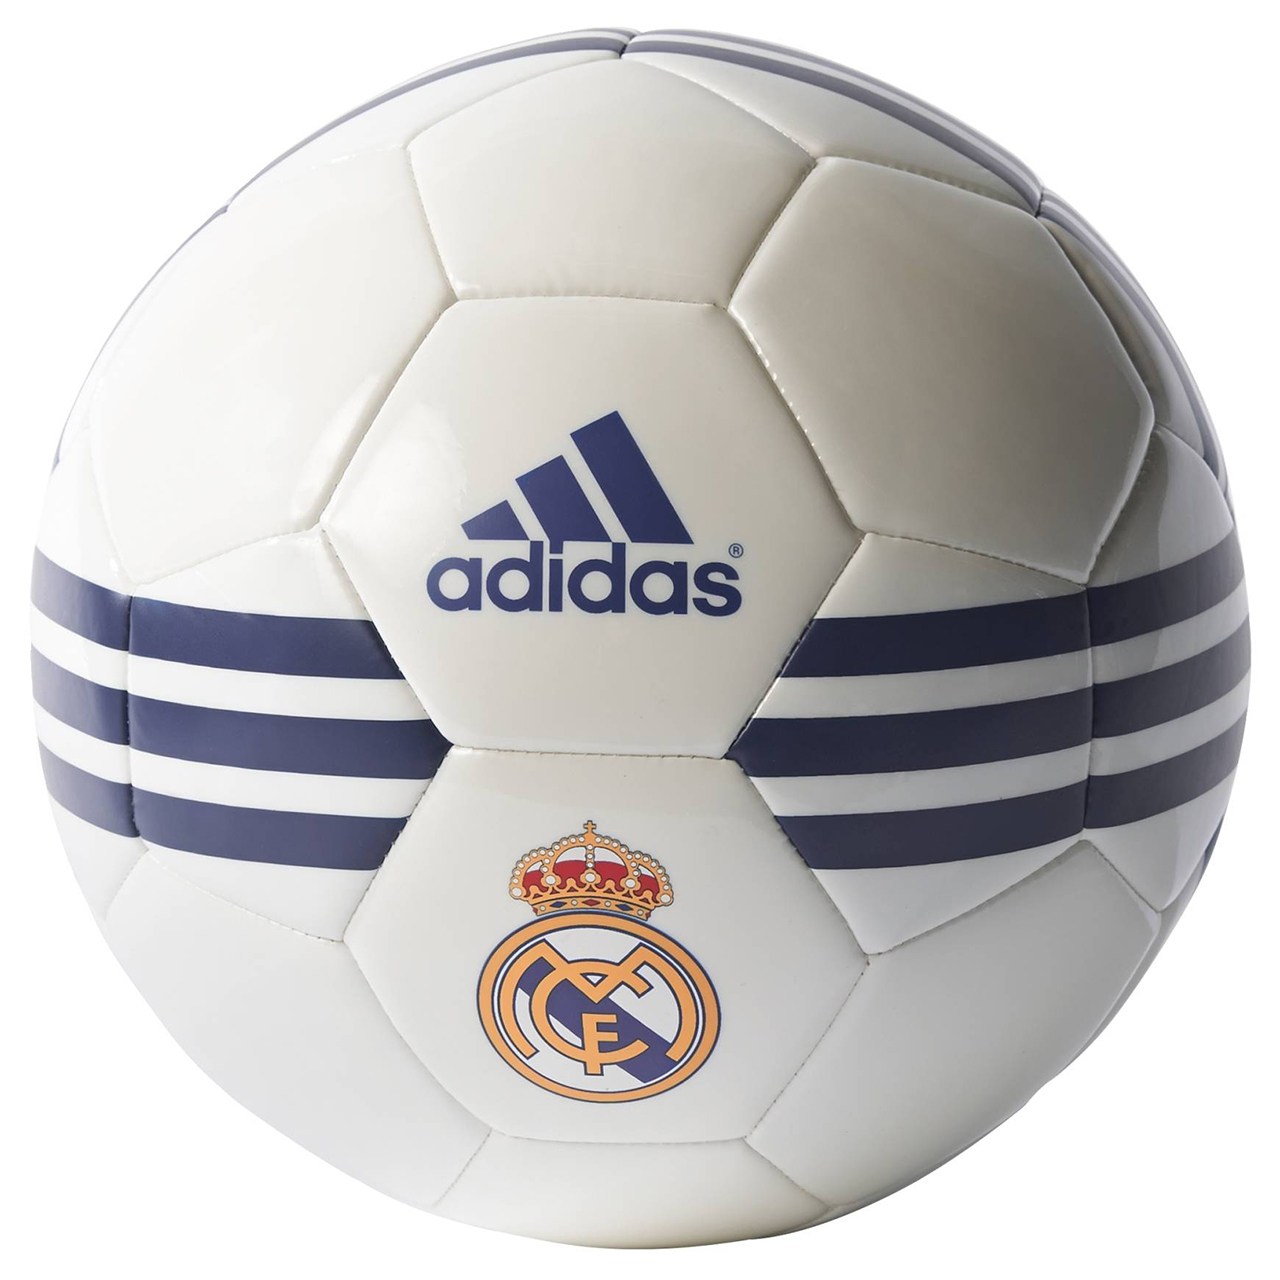 توپ فوتبال آدیداس مدل Real Madrid سایز 5